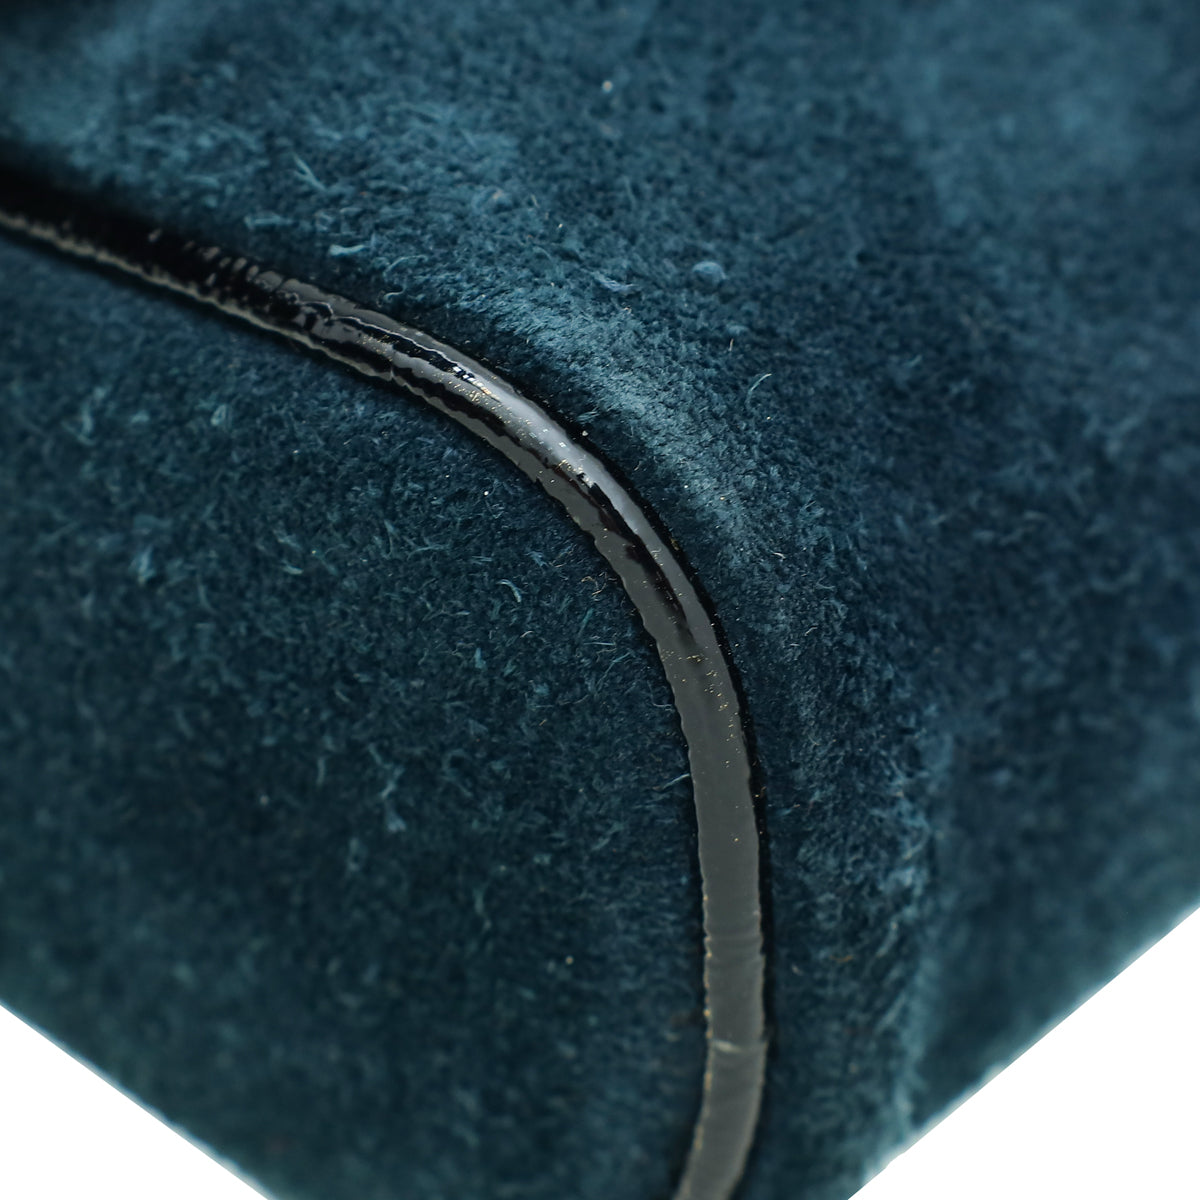 Gucci Black Ophidia Web Small Belt Bag